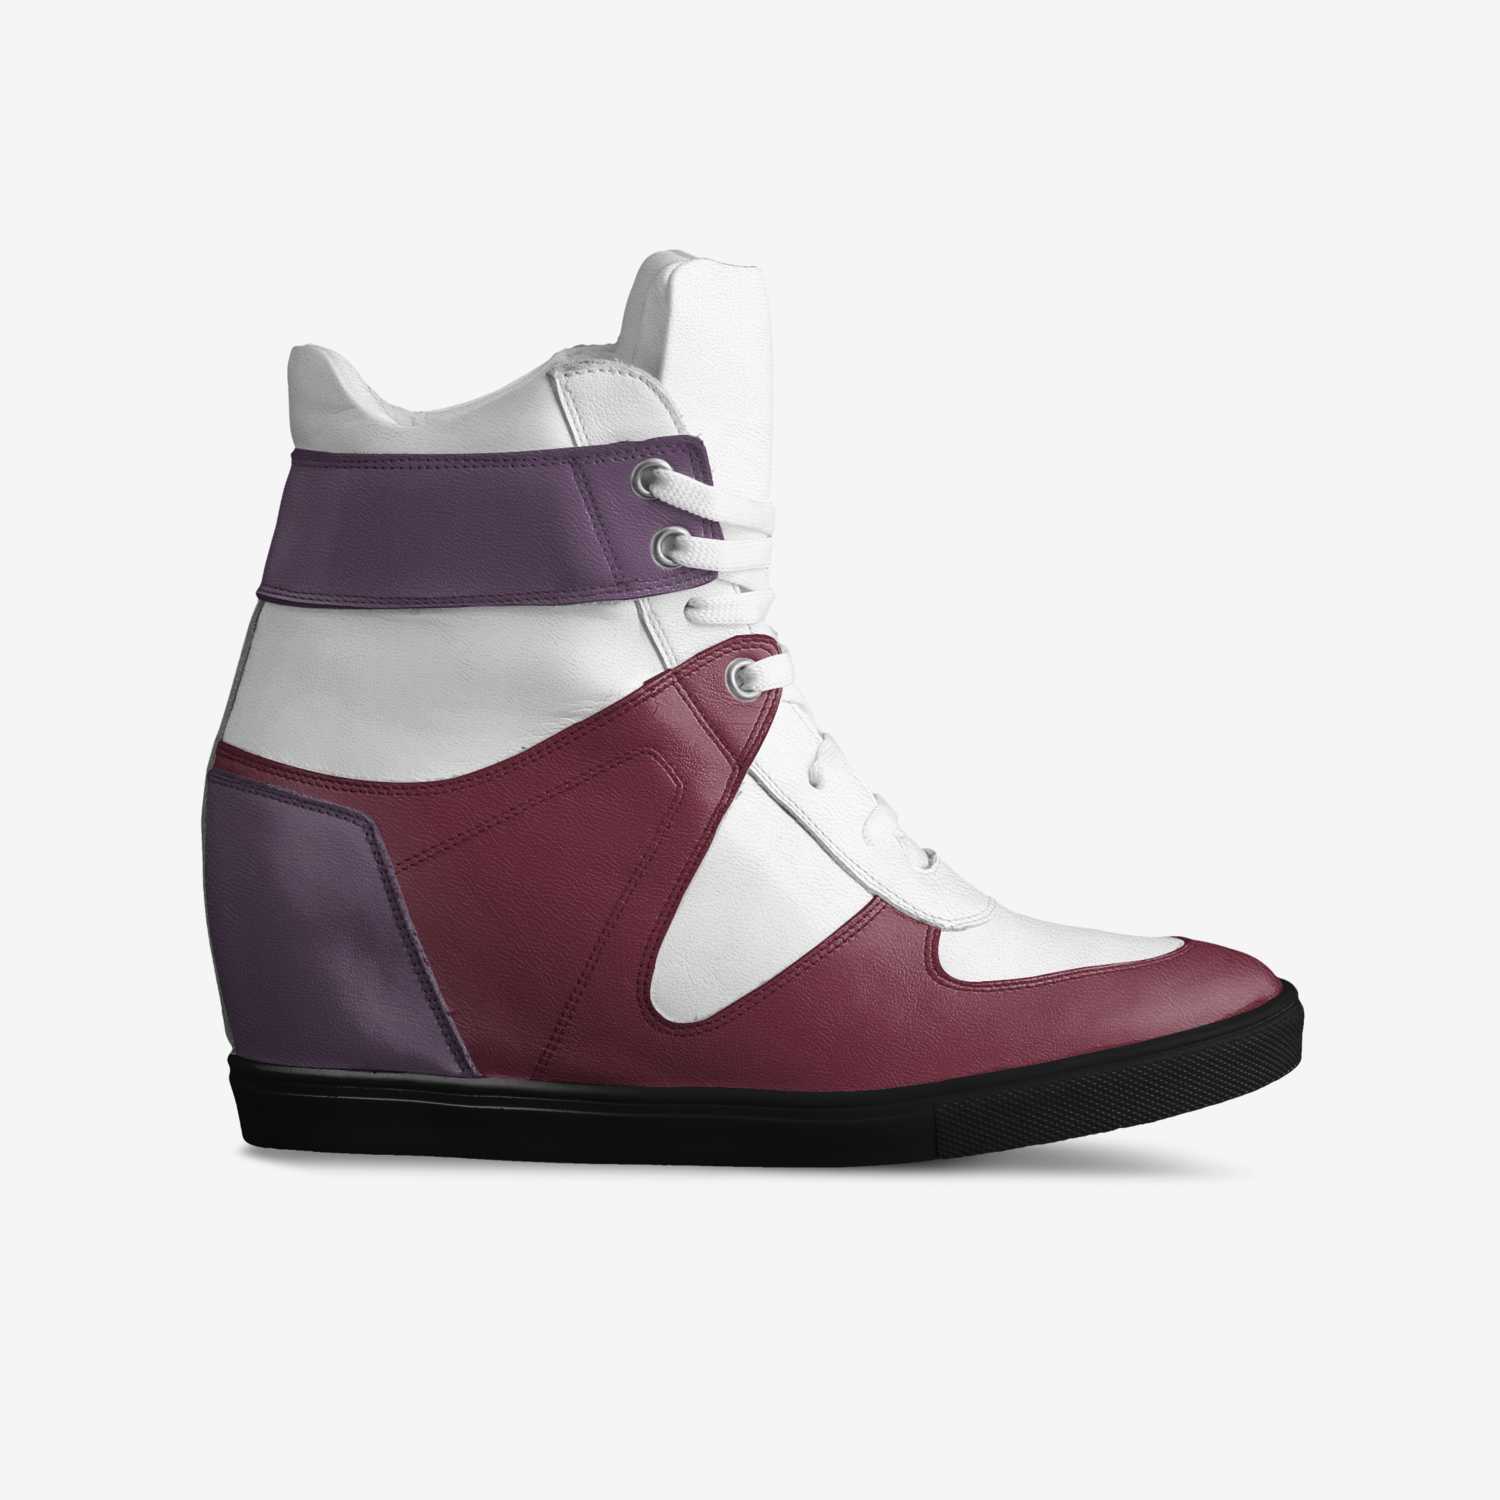 Romolo custom made in Italy shoes by Eleni Tziraki | Side view